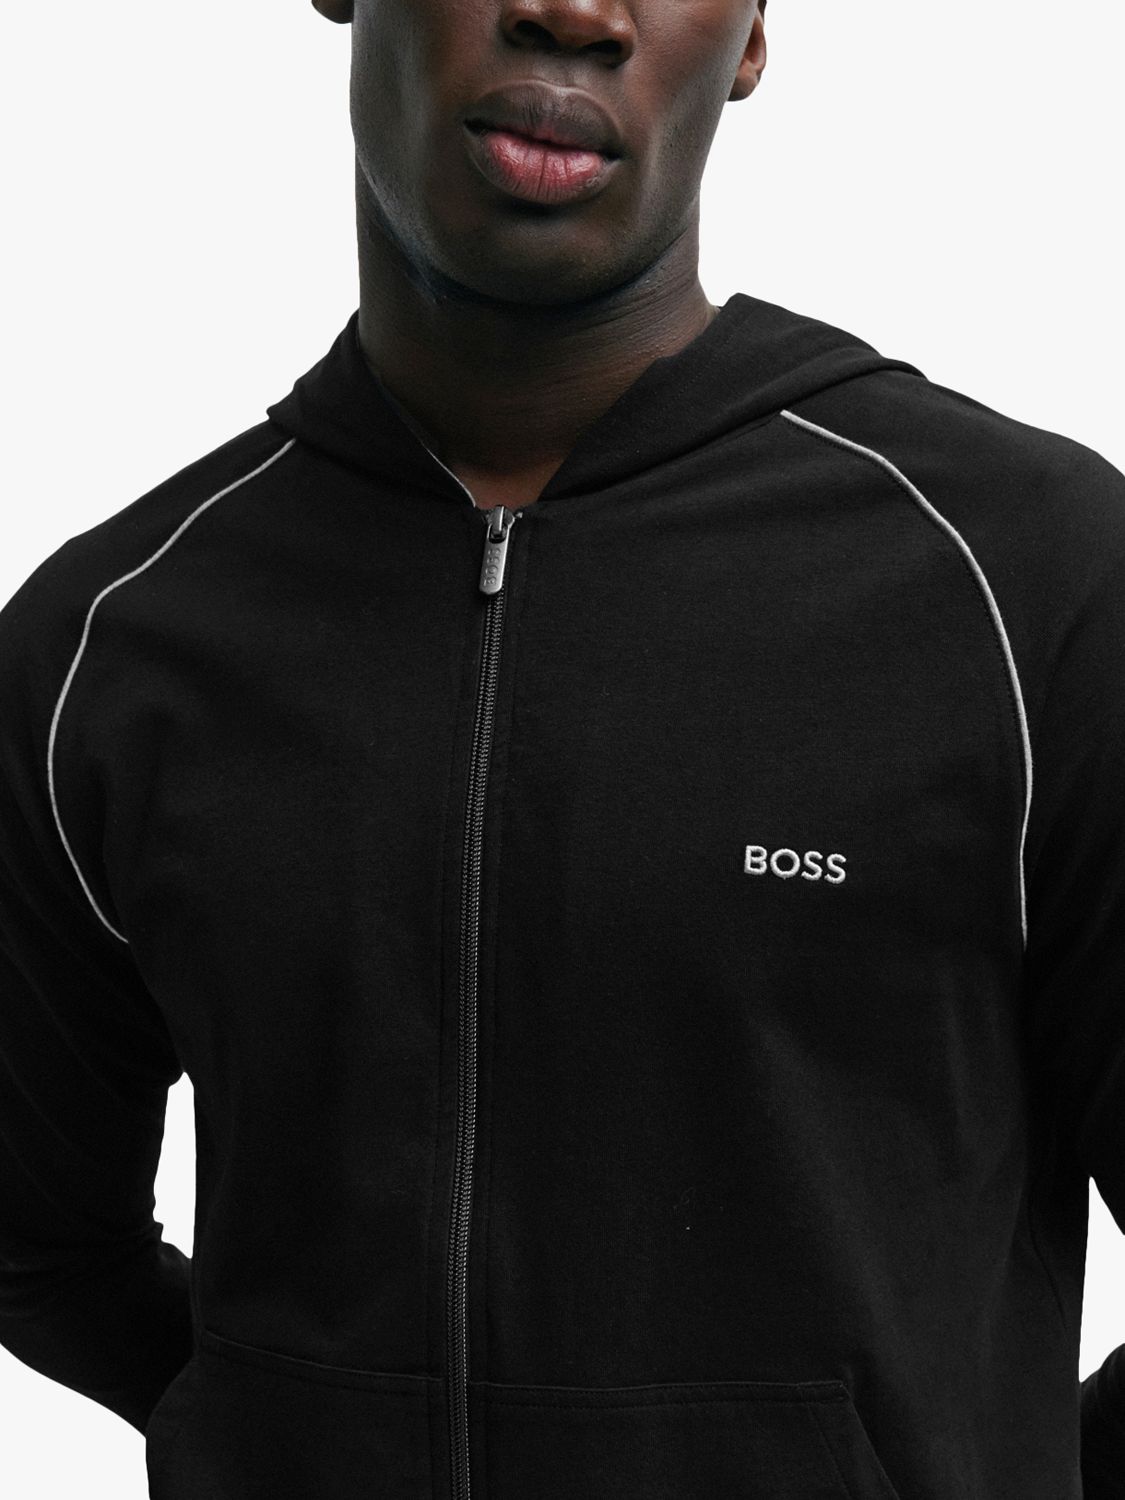 BOSS Mix&Match Embroidered Logo Hoodie, Black, M